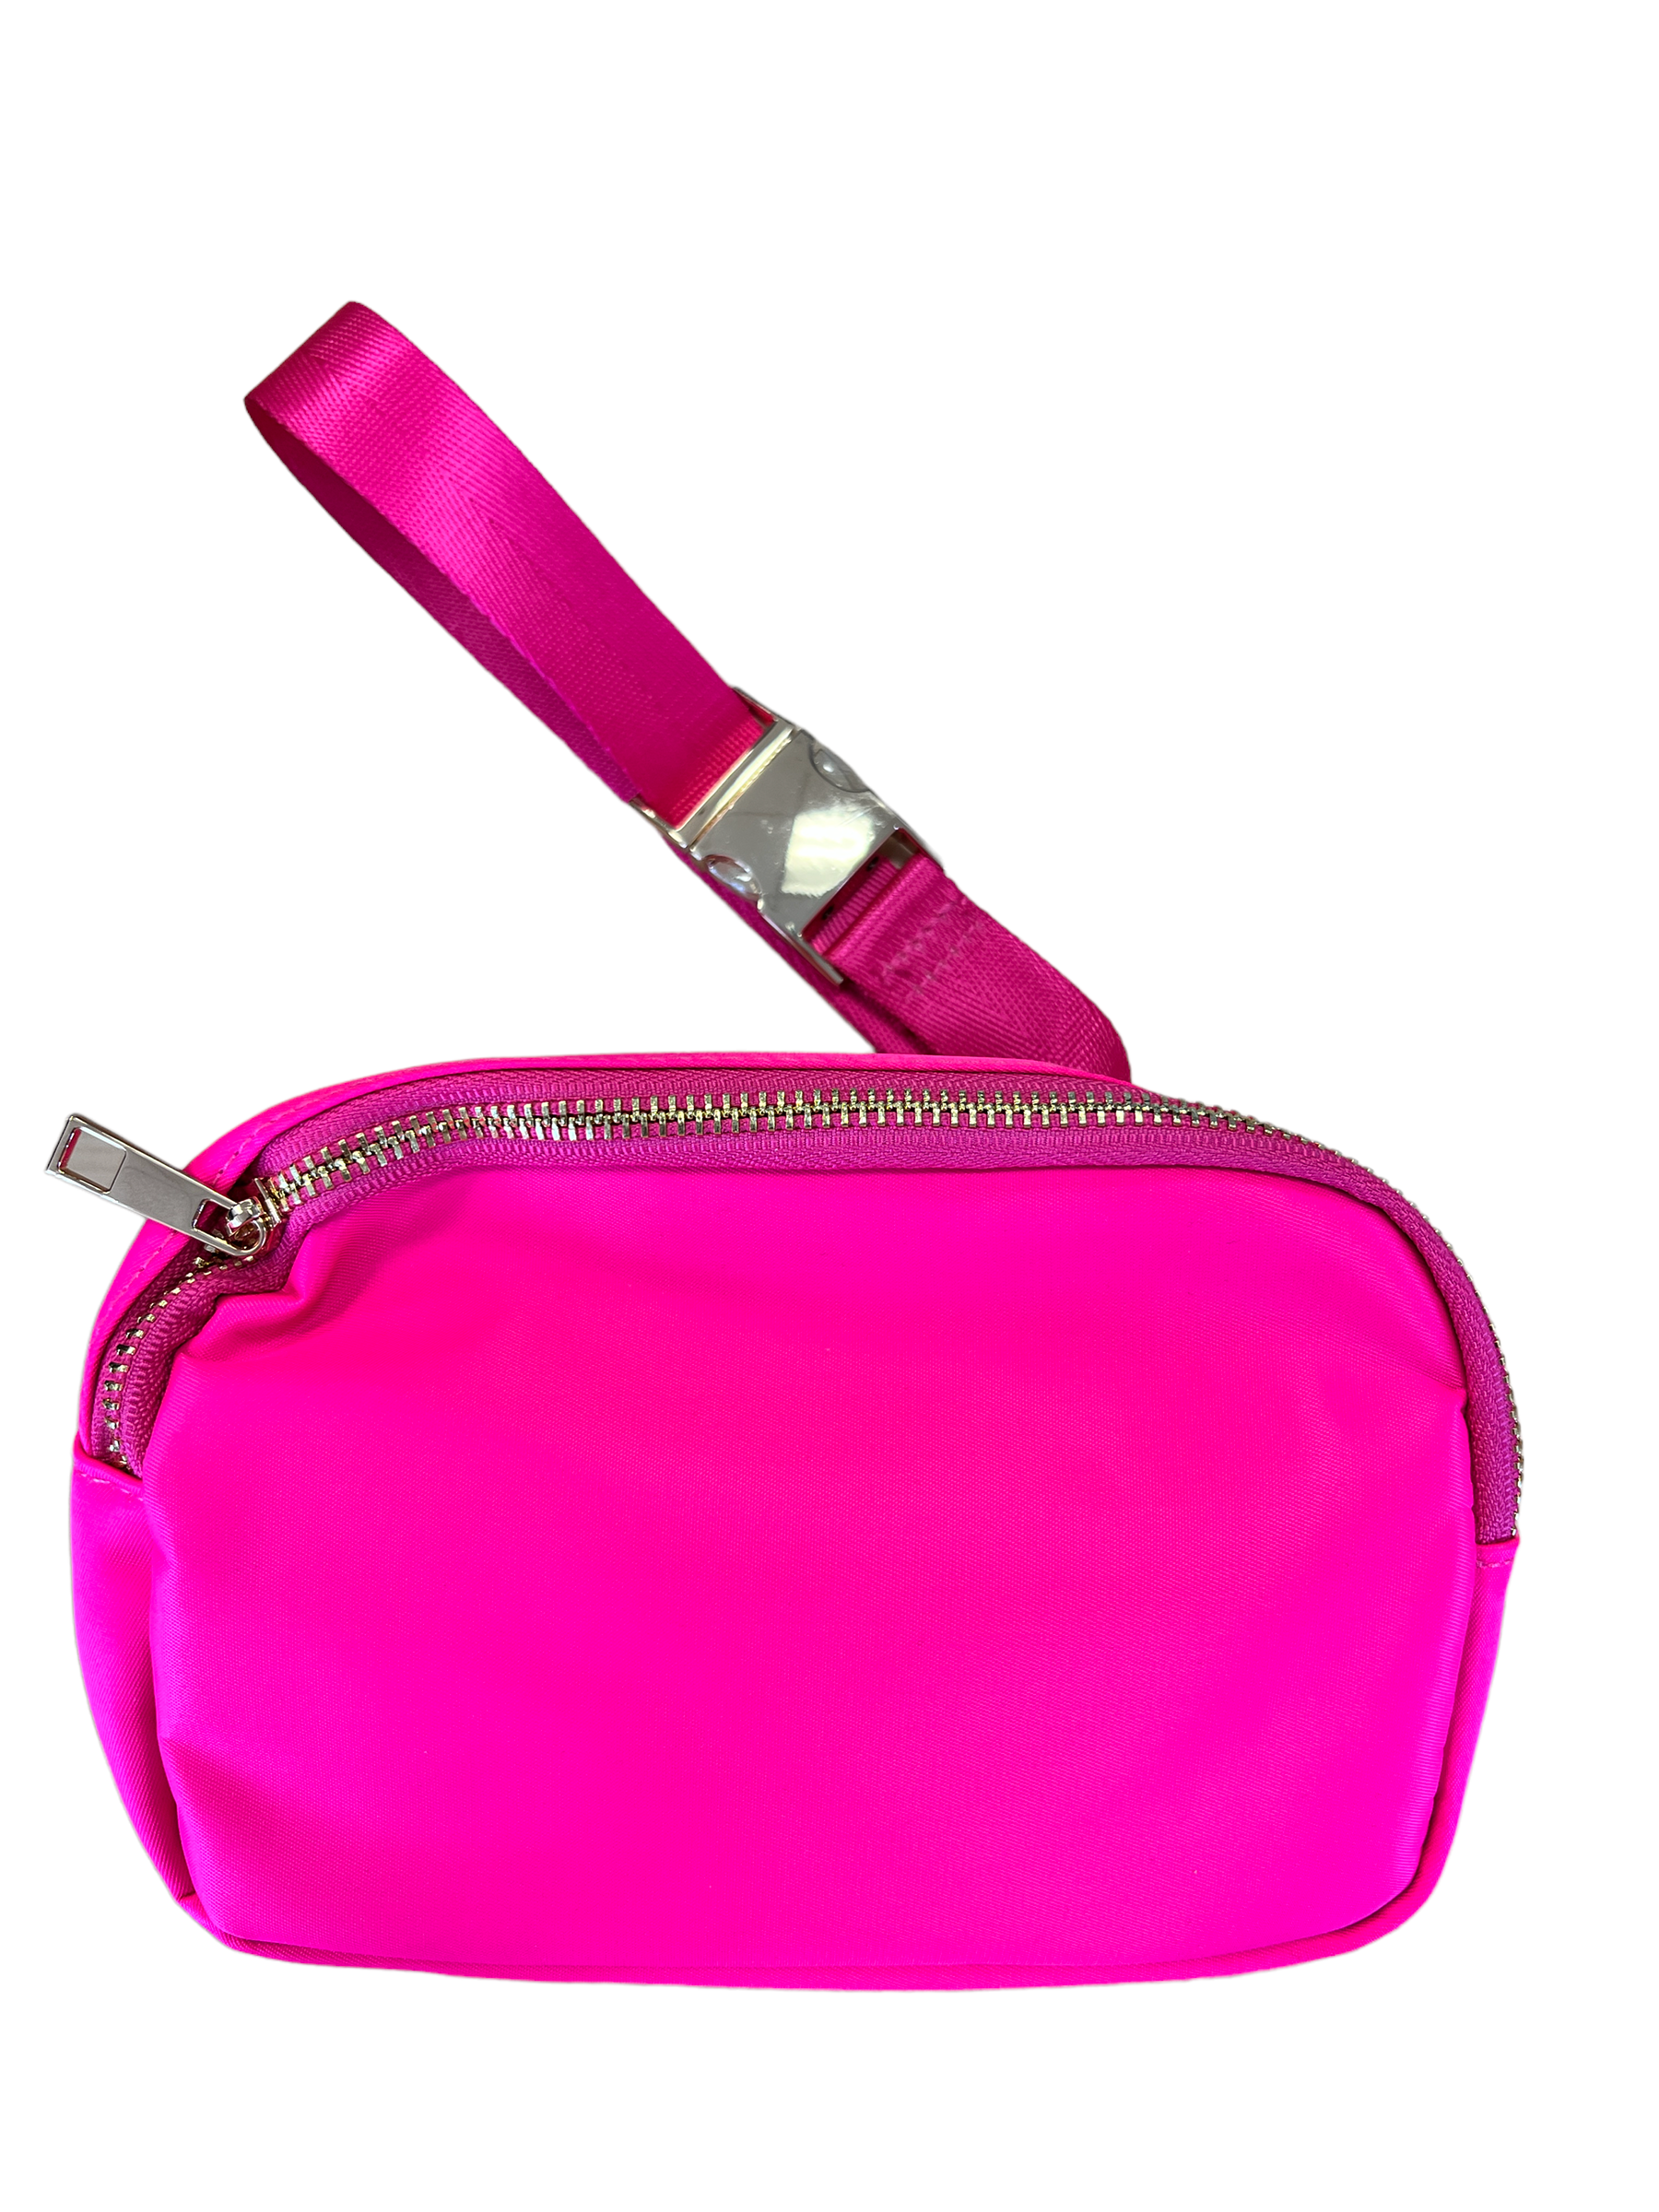 Belt Bag-Simply Stylish Boutique-Simply Stylish Boutique | Women’s & Kid’s Fashion | Paducah, KY